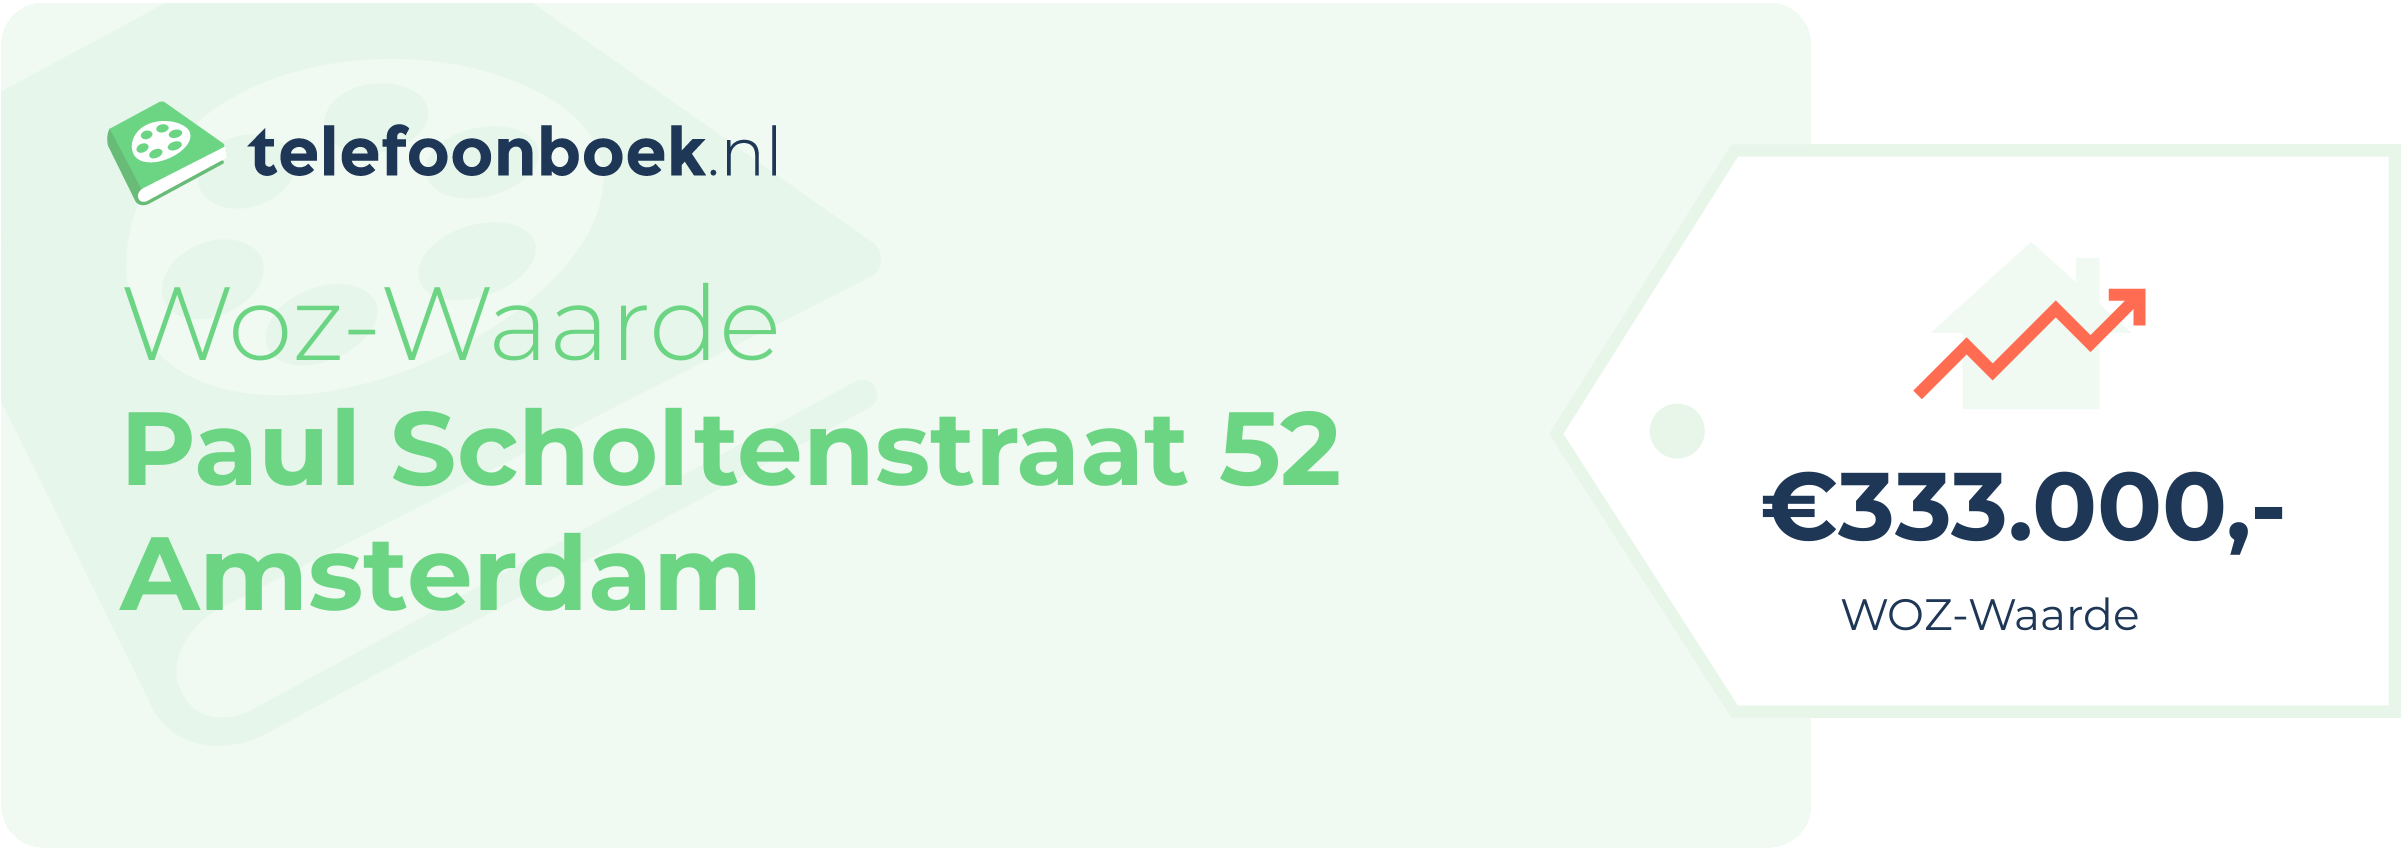 WOZ-waarde Paul Scholtenstraat 52 Amsterdam